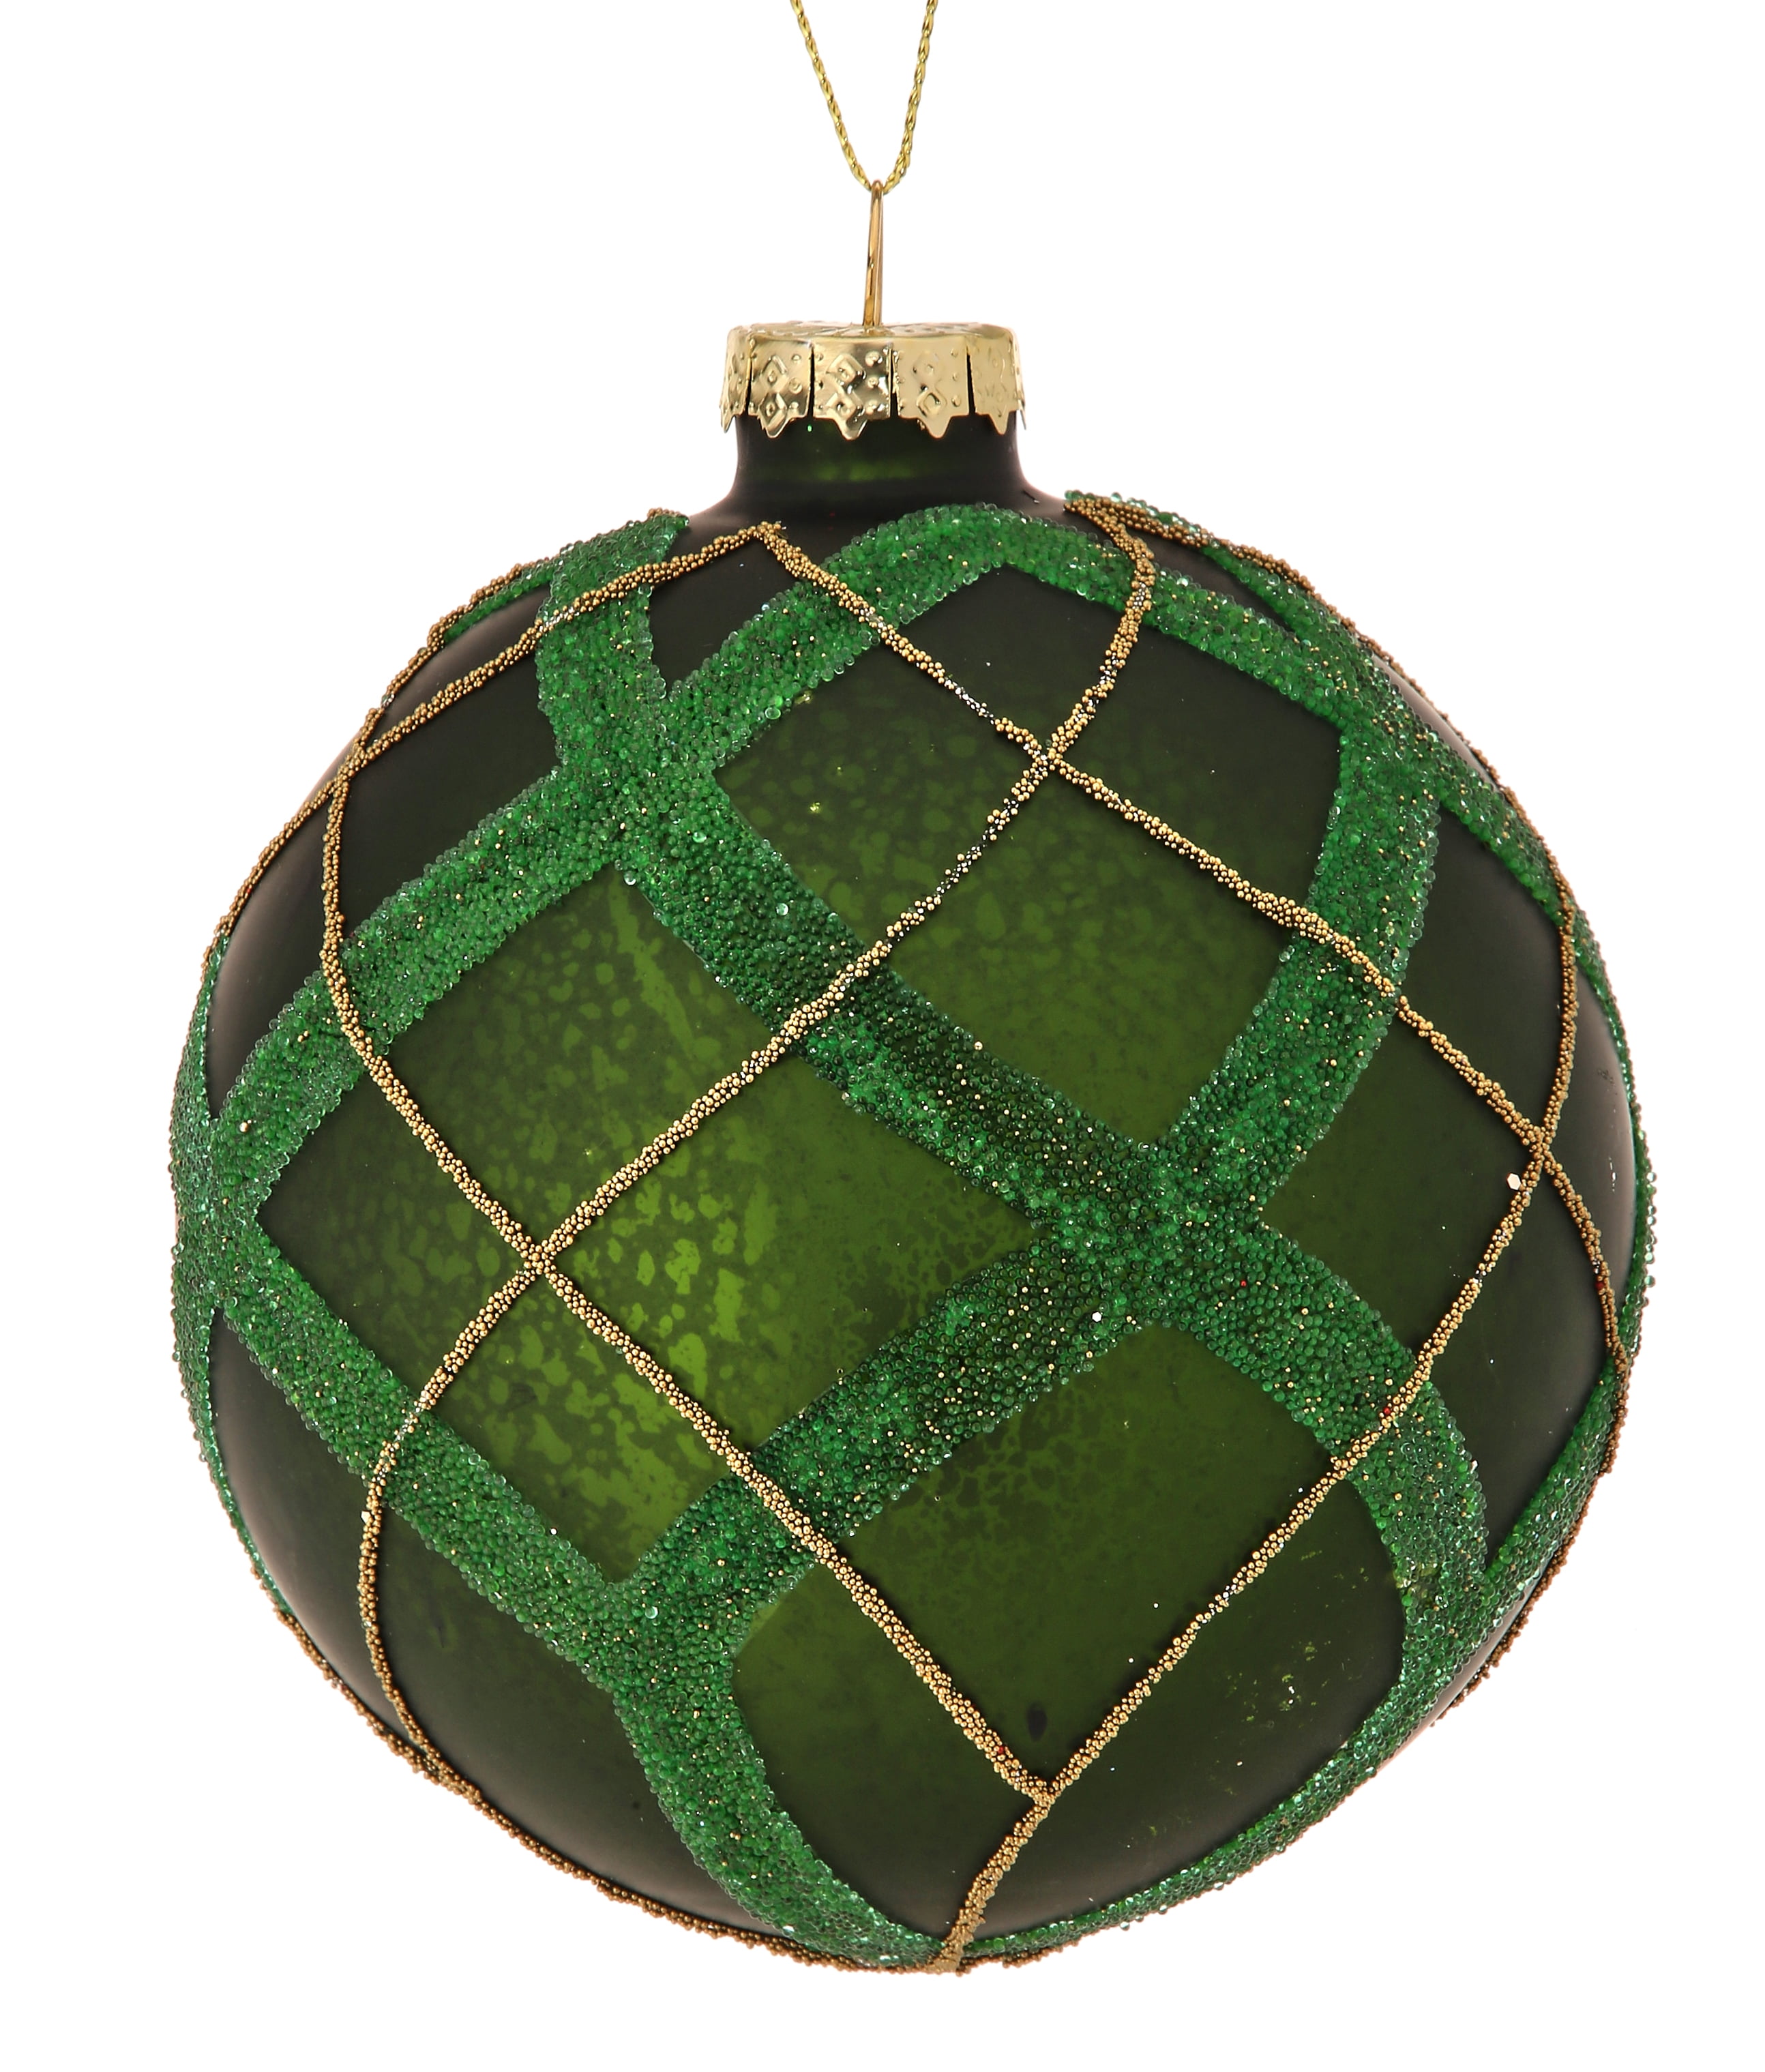 Regency International 100 mm VP Glitter Plaid Ball Ornament Box of 3